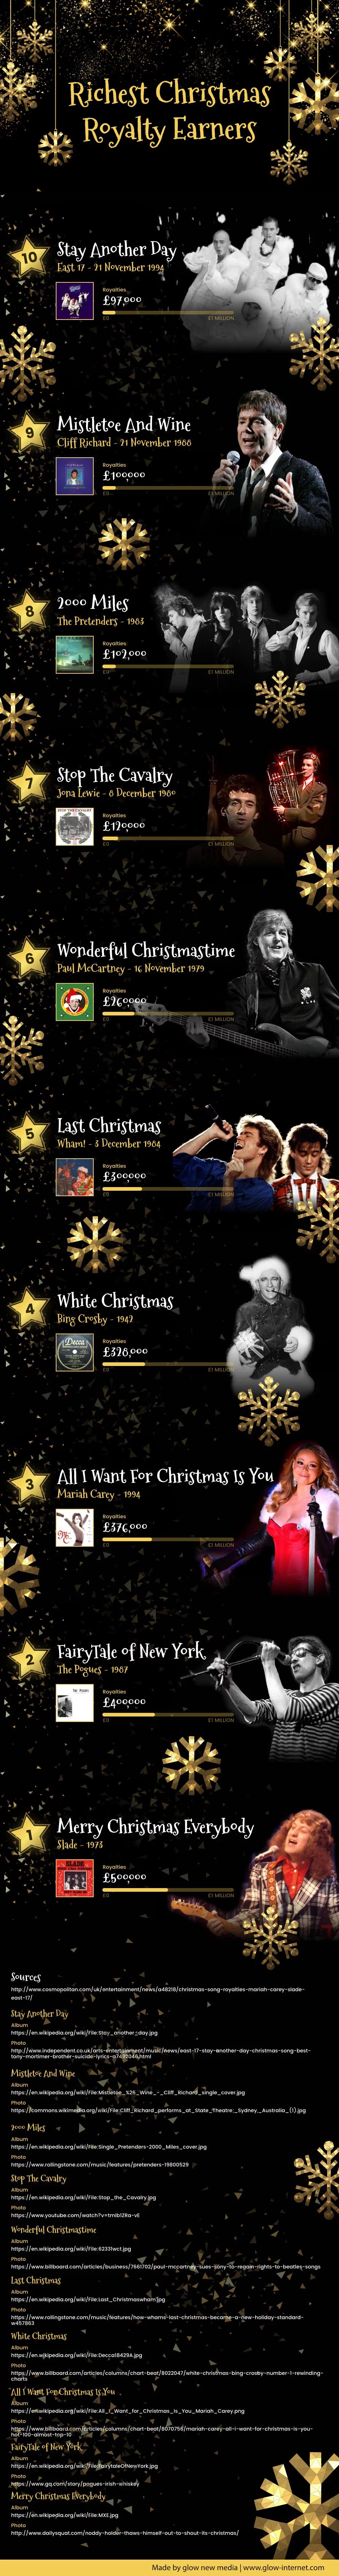 Best UK Christmas Songs